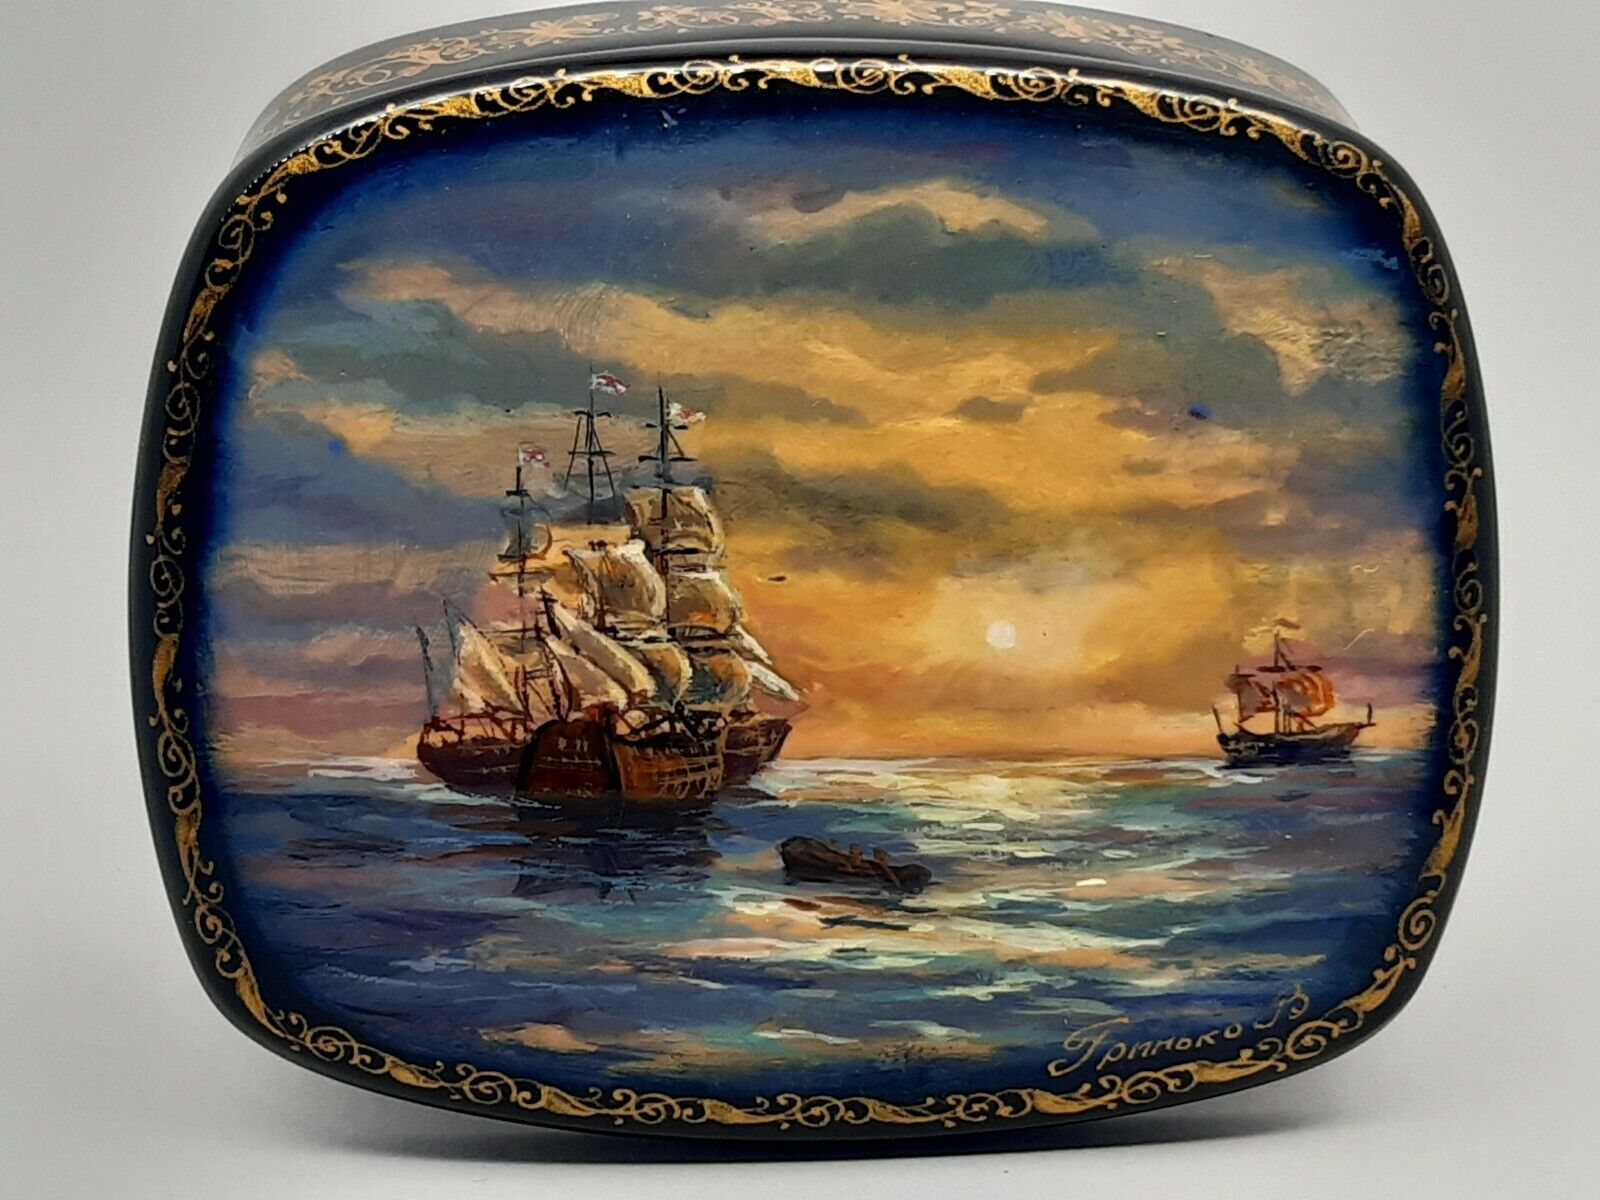 Ukrainian lacquer box “Evening Seascape” by artist Grinko Hand made in Ukraine